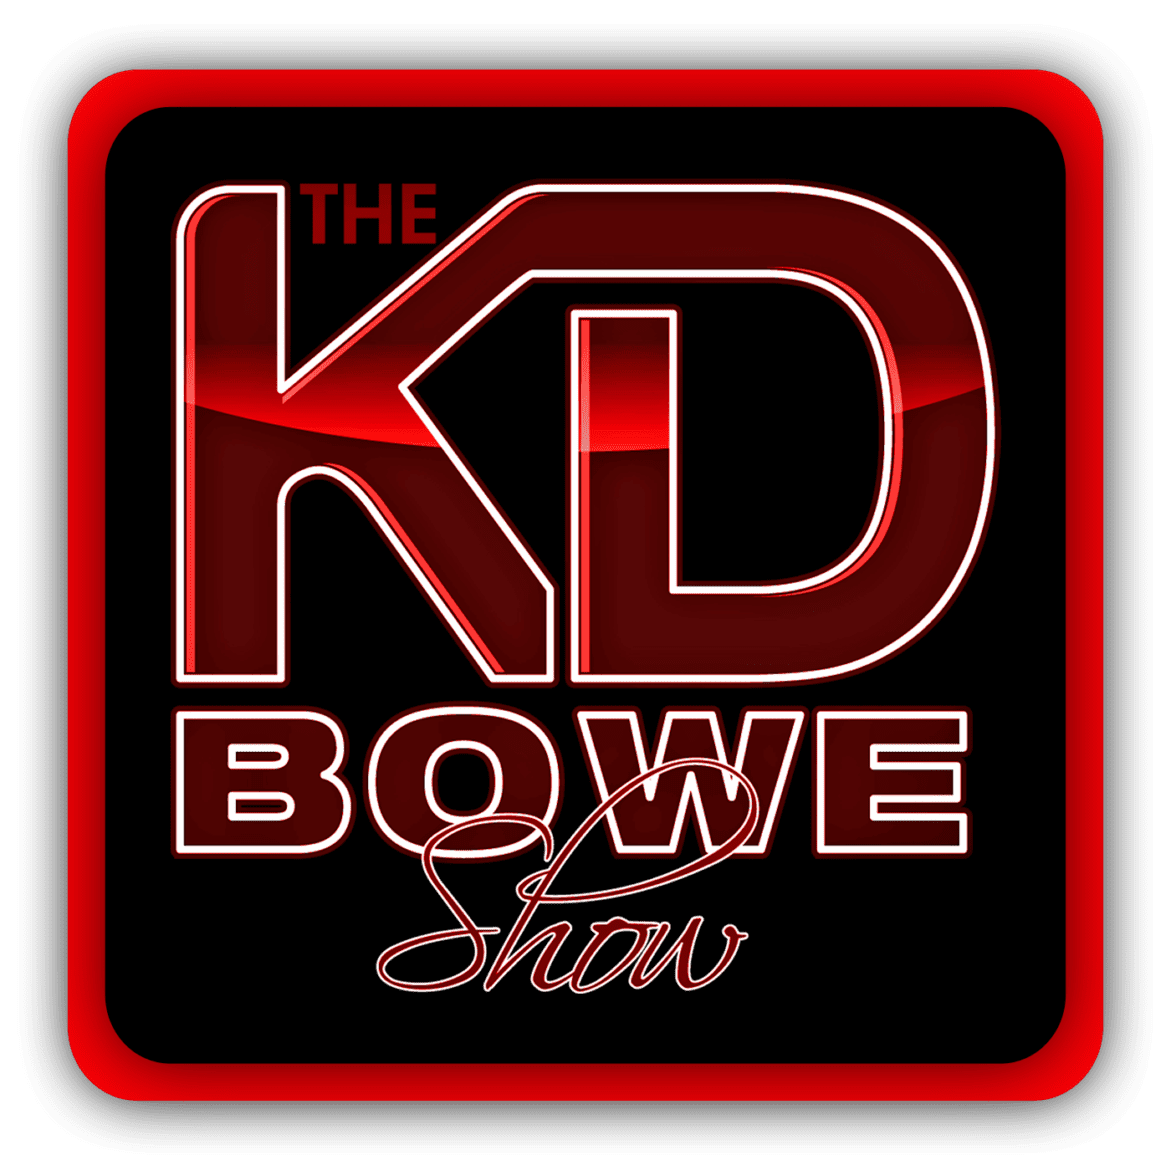 Black Podcasting - KD Bowe Show - Episode 8